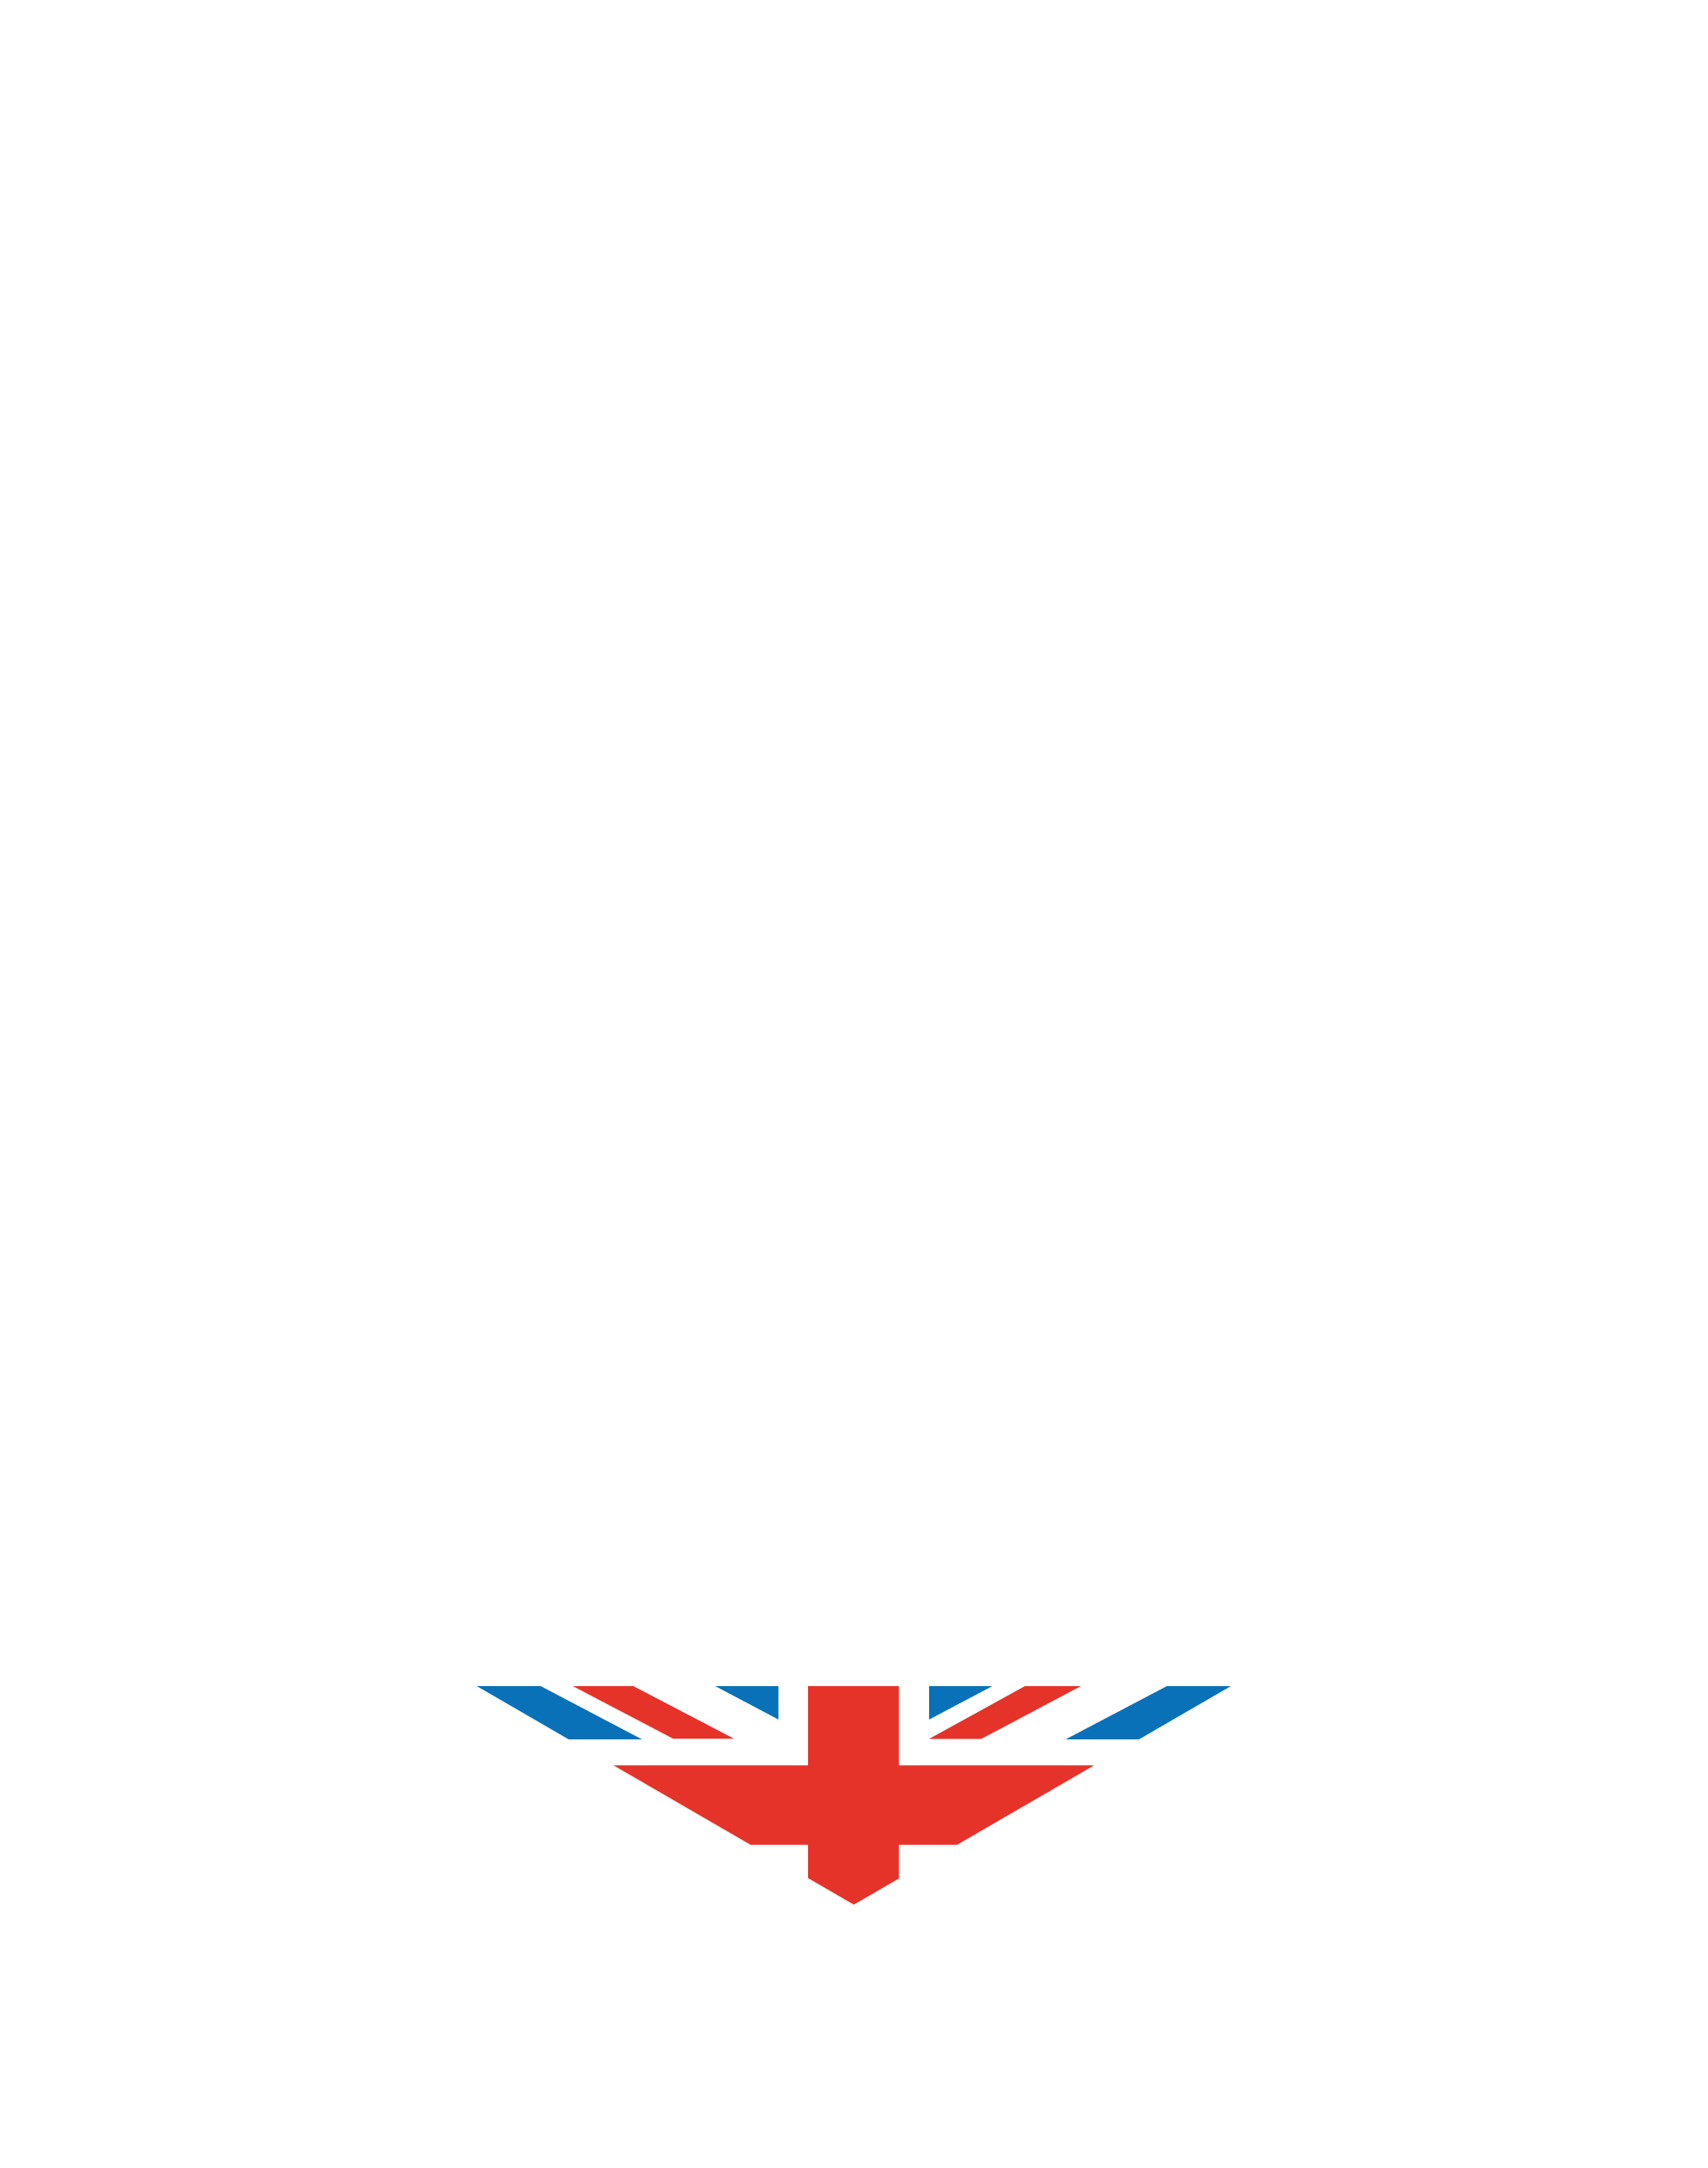 Race Across United Kingdom